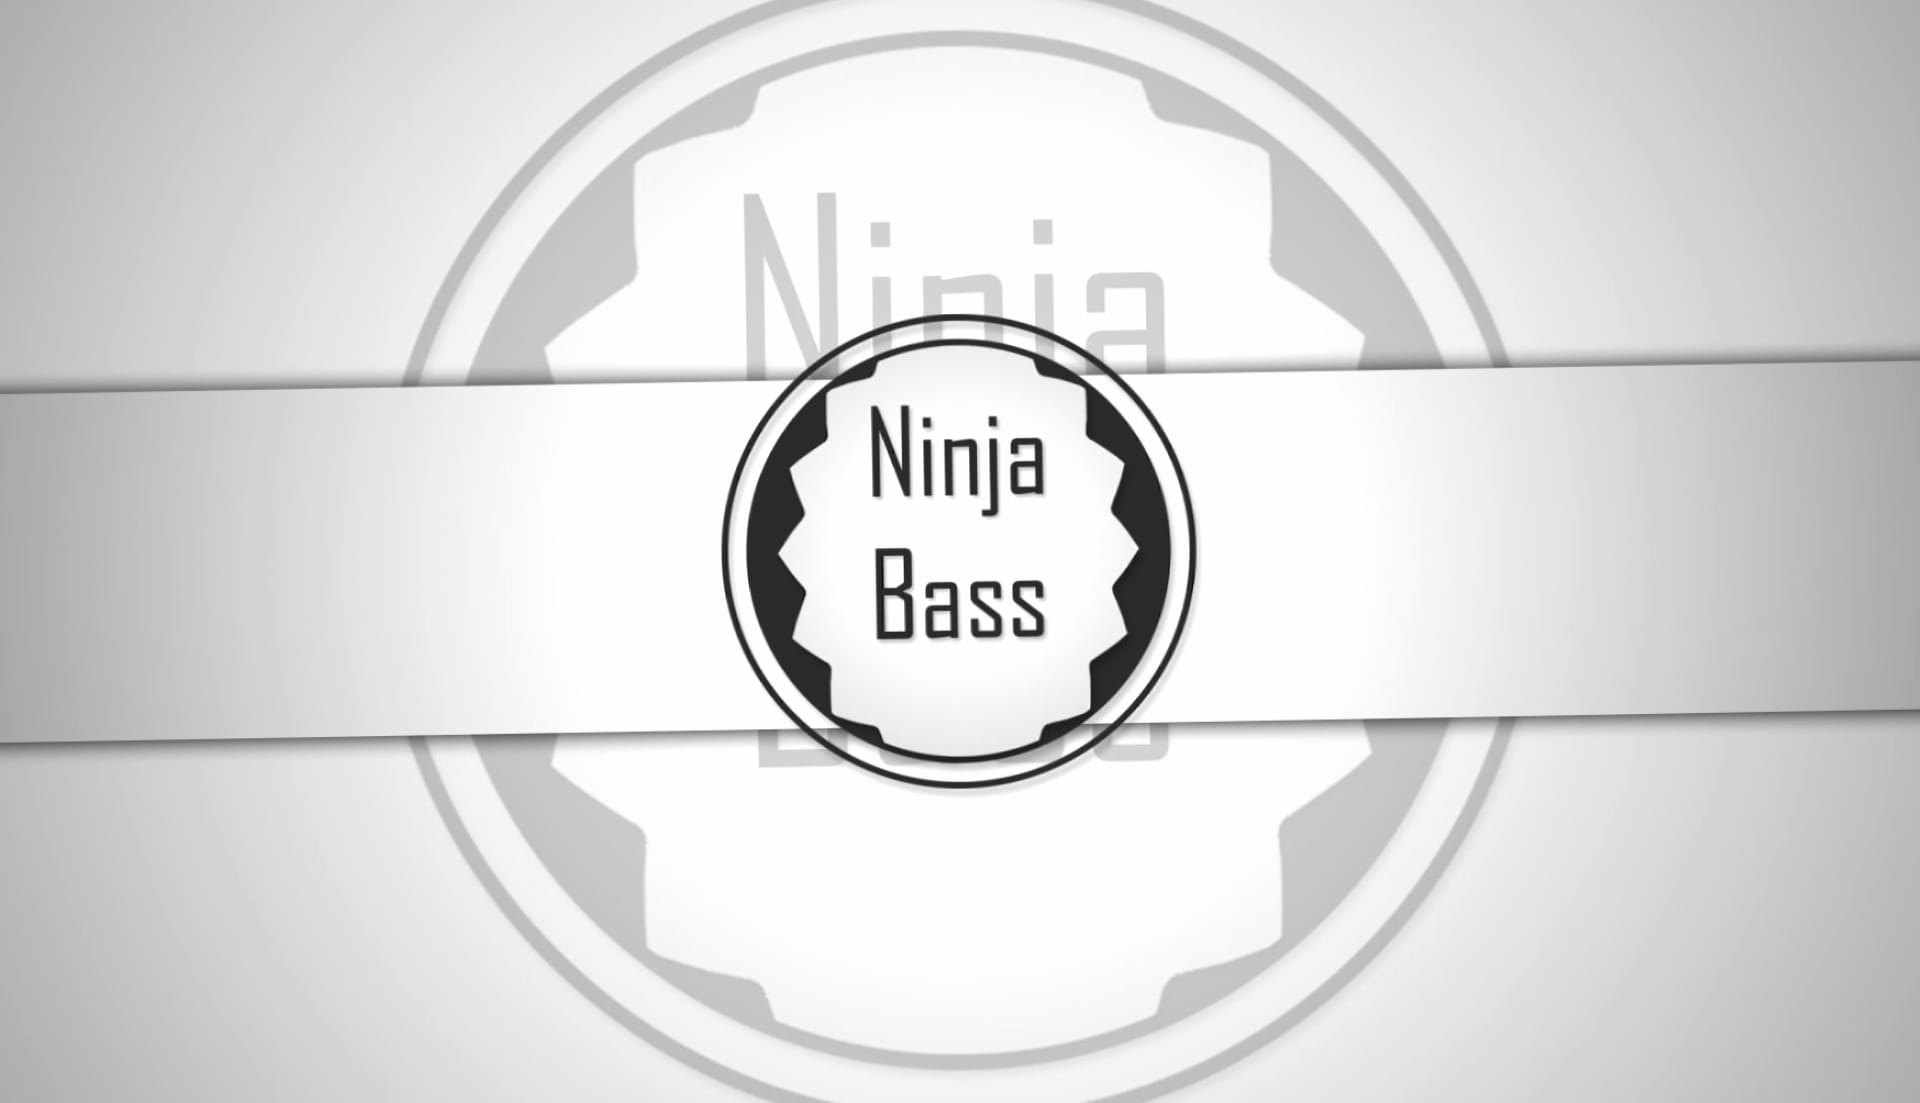 Ninja Bass at 1024 x 1024 iPad size wallpapers HD quality